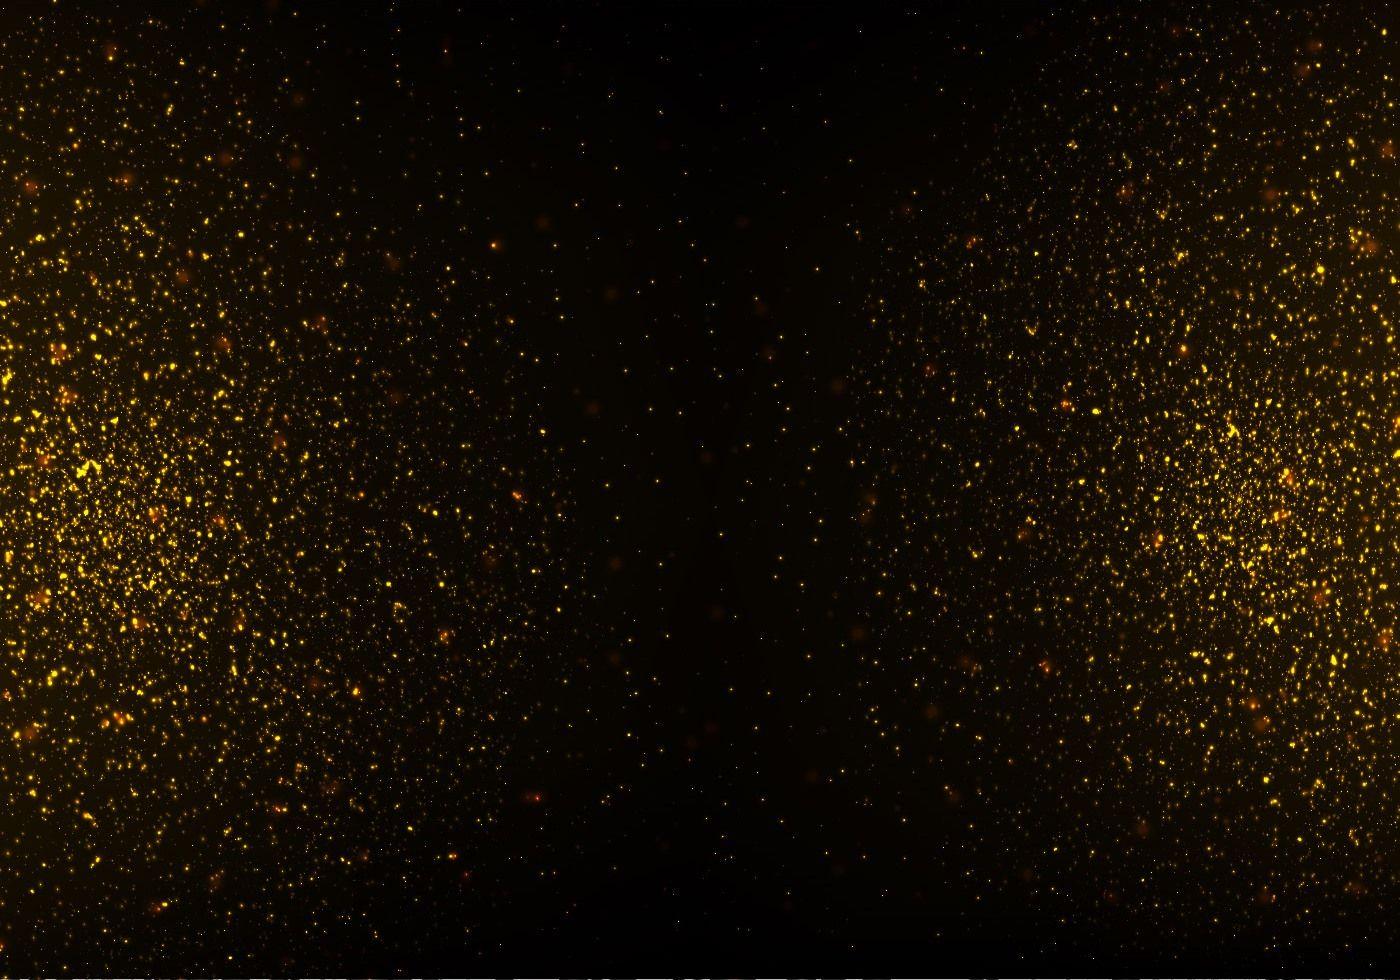 Strass Vector, Gold Glitter Texture On Black Background